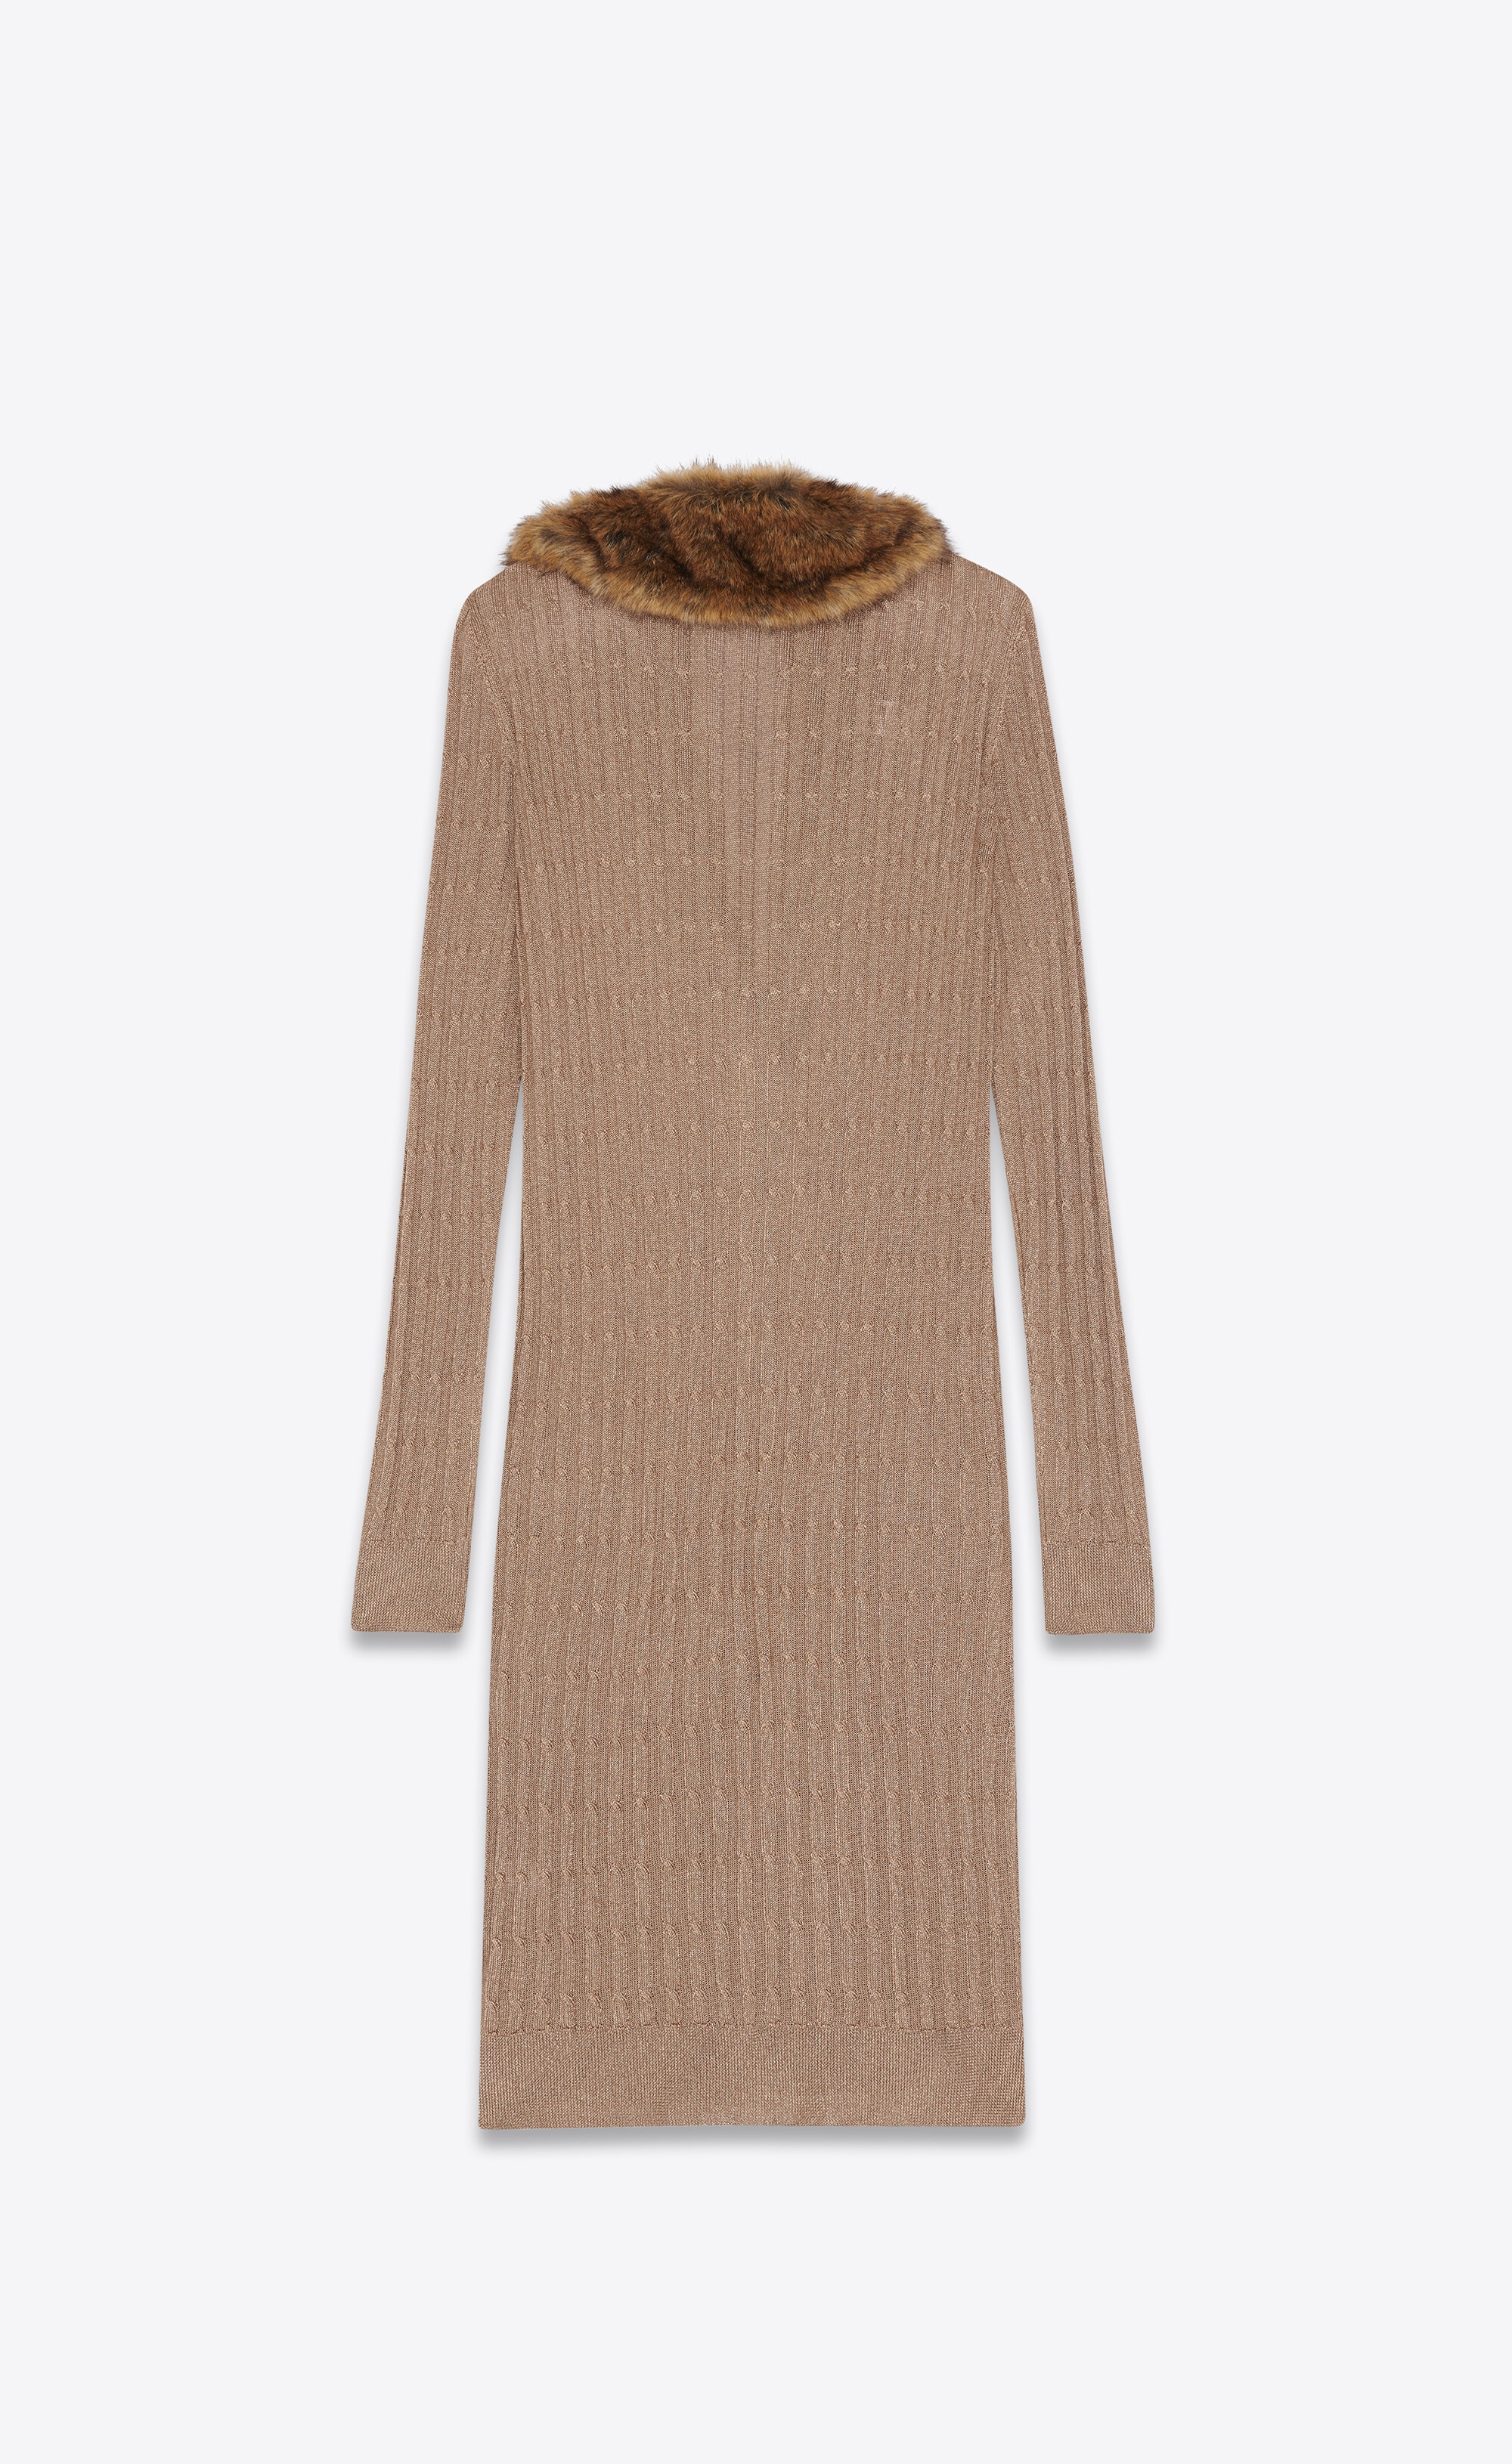 long cardigan dress in ribbed knit wool - 2